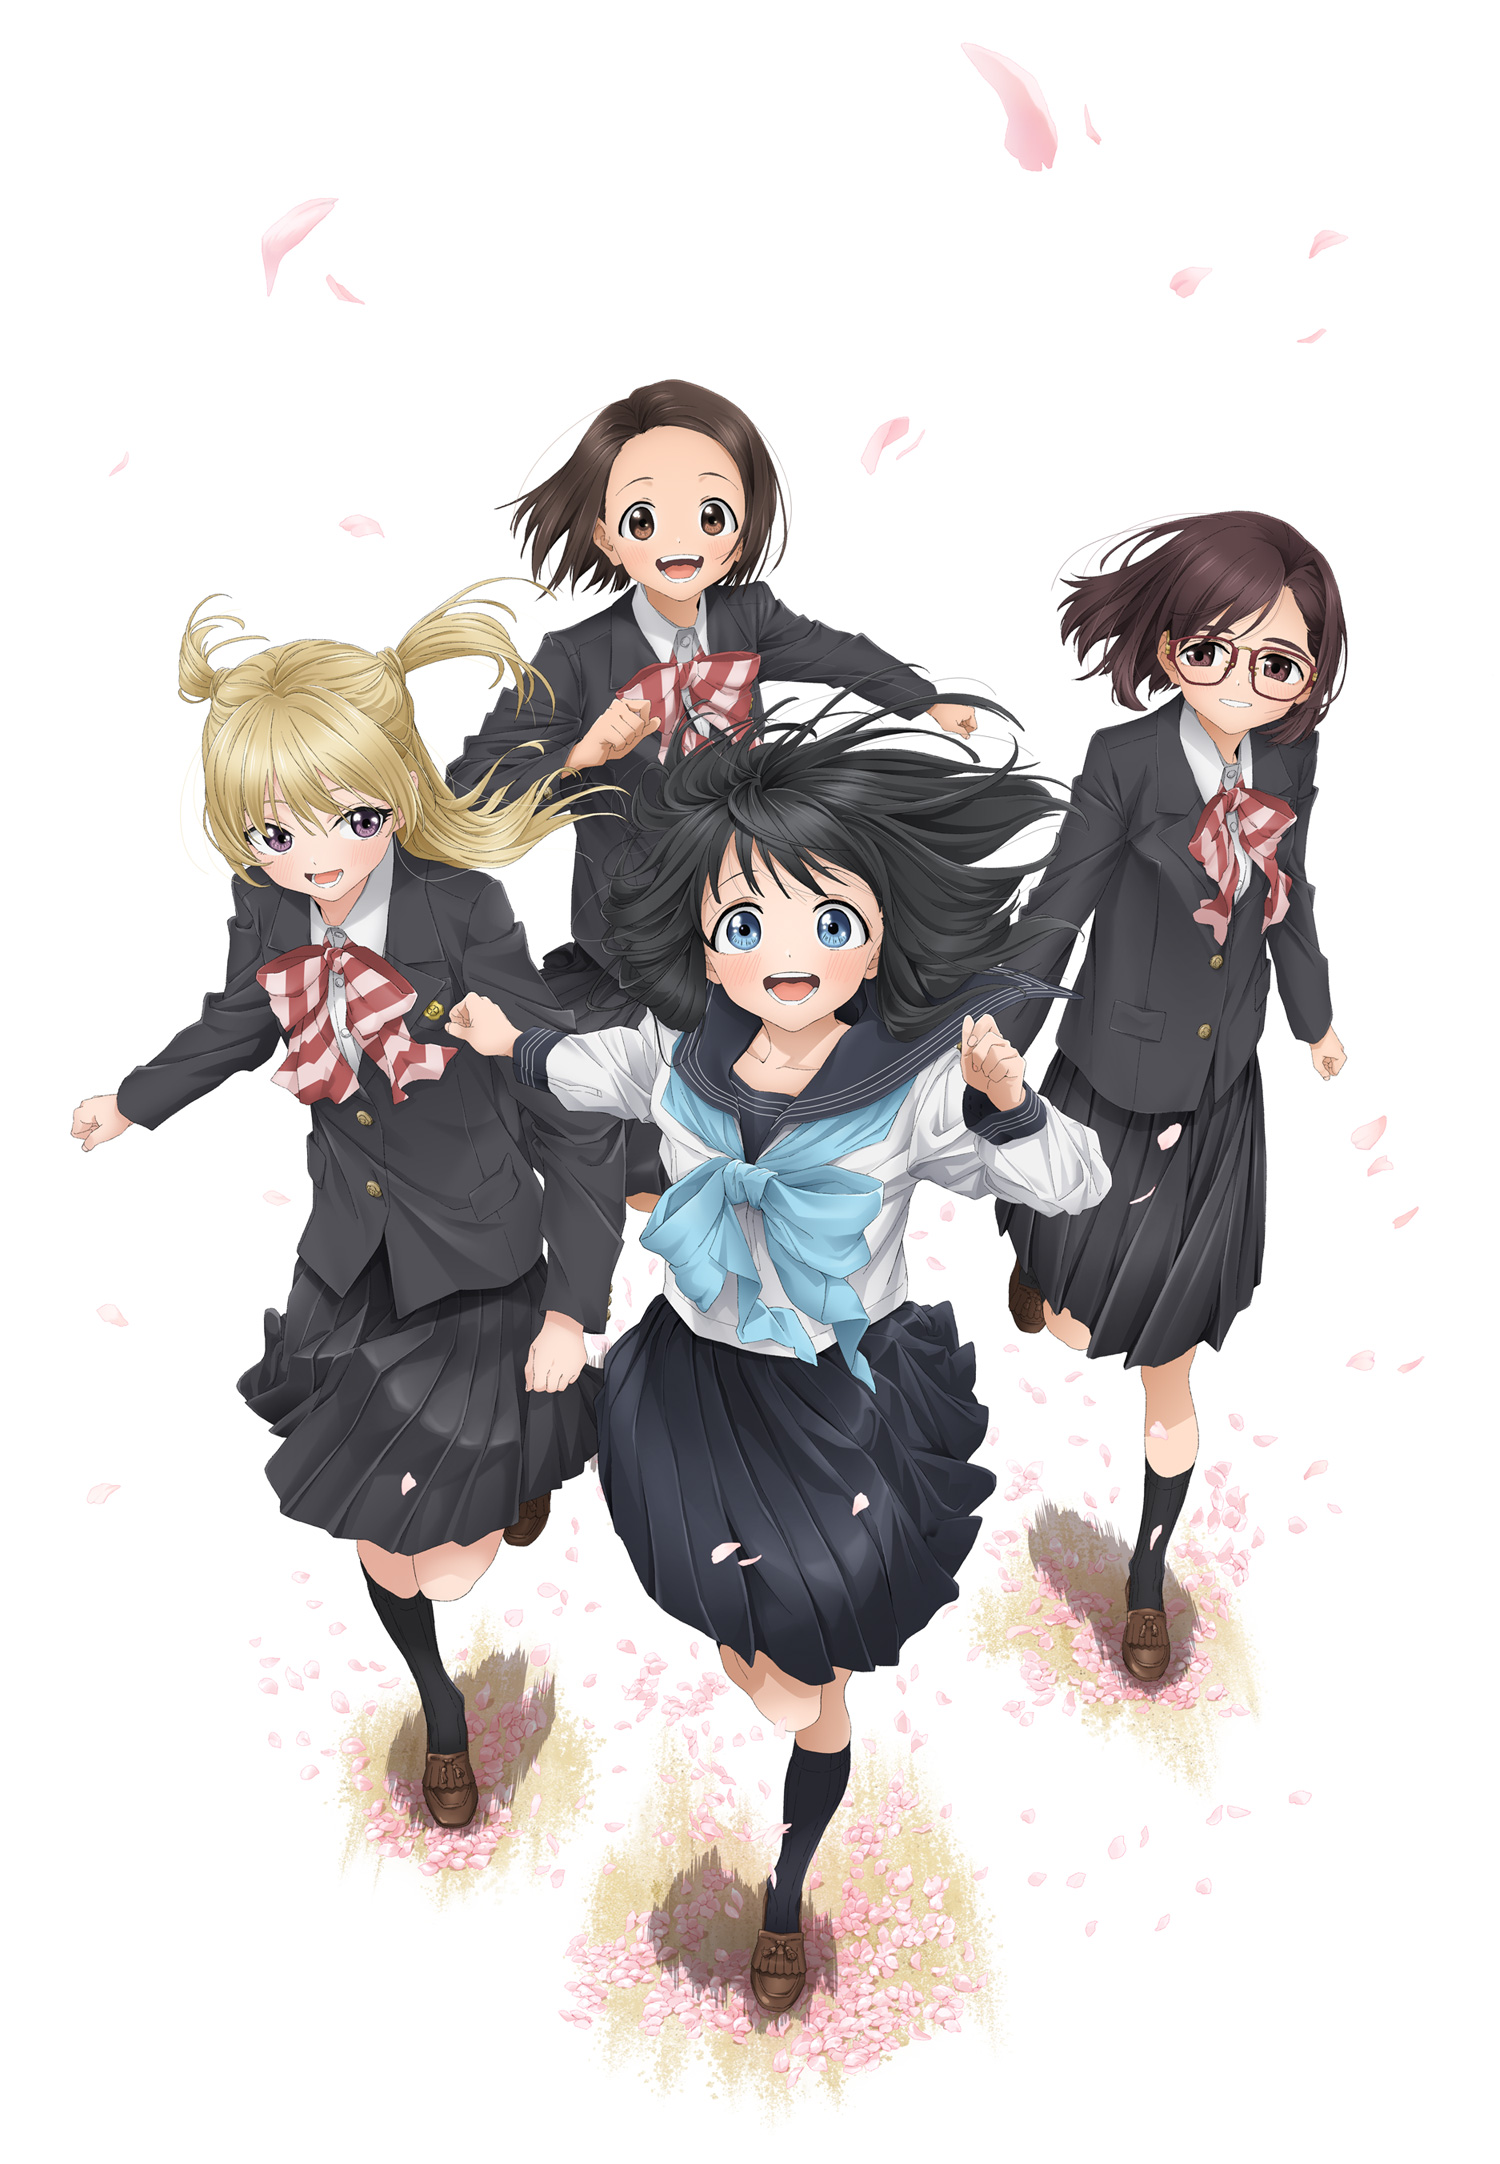 Akebi's Sailor Uniform Episode 3 - Which Club to Choose? - Anime Corner